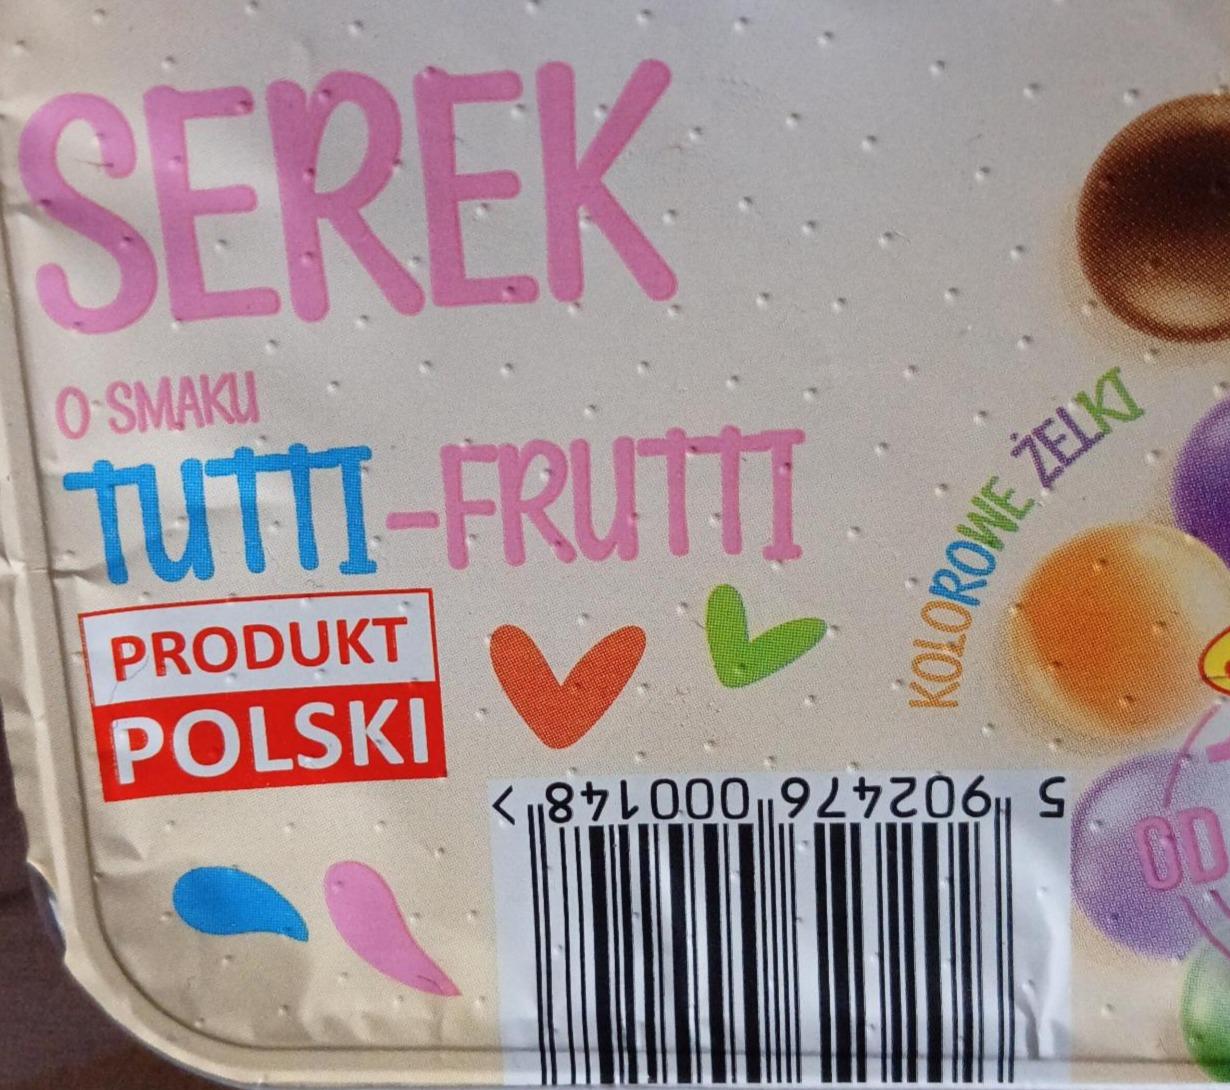 Фото - Serek o smaku tutti frutti Jana